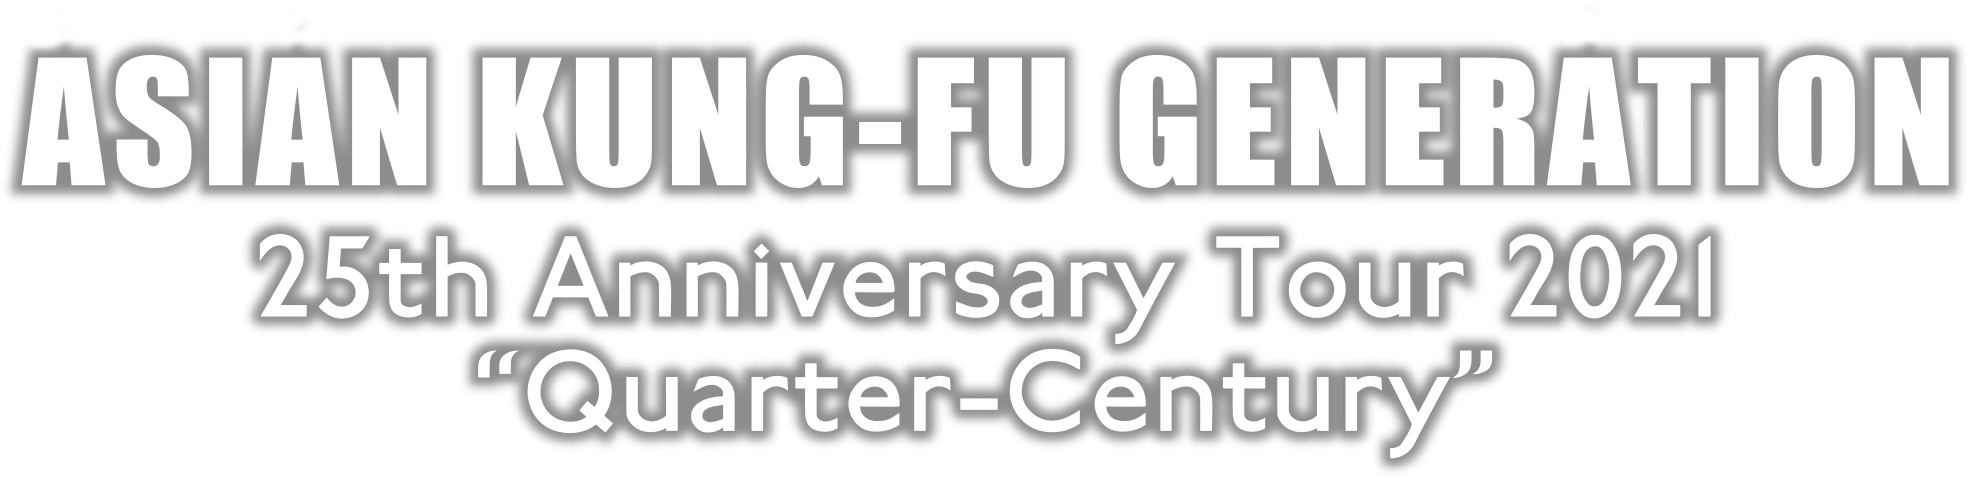 ASIAN KUNG-FU GENERATION 25th Anniversary Tour 2021 “Quarter-Century”